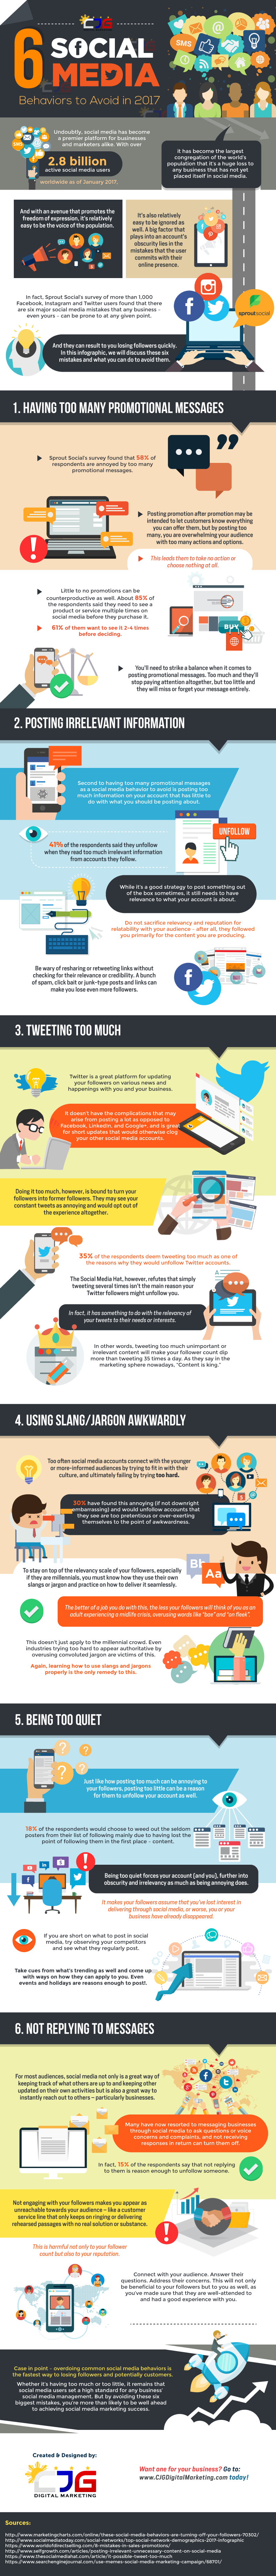 6 Social Media Behaviors to Avoid in 2017 (Infographic) - An Infographic from CJG Digital Marketing